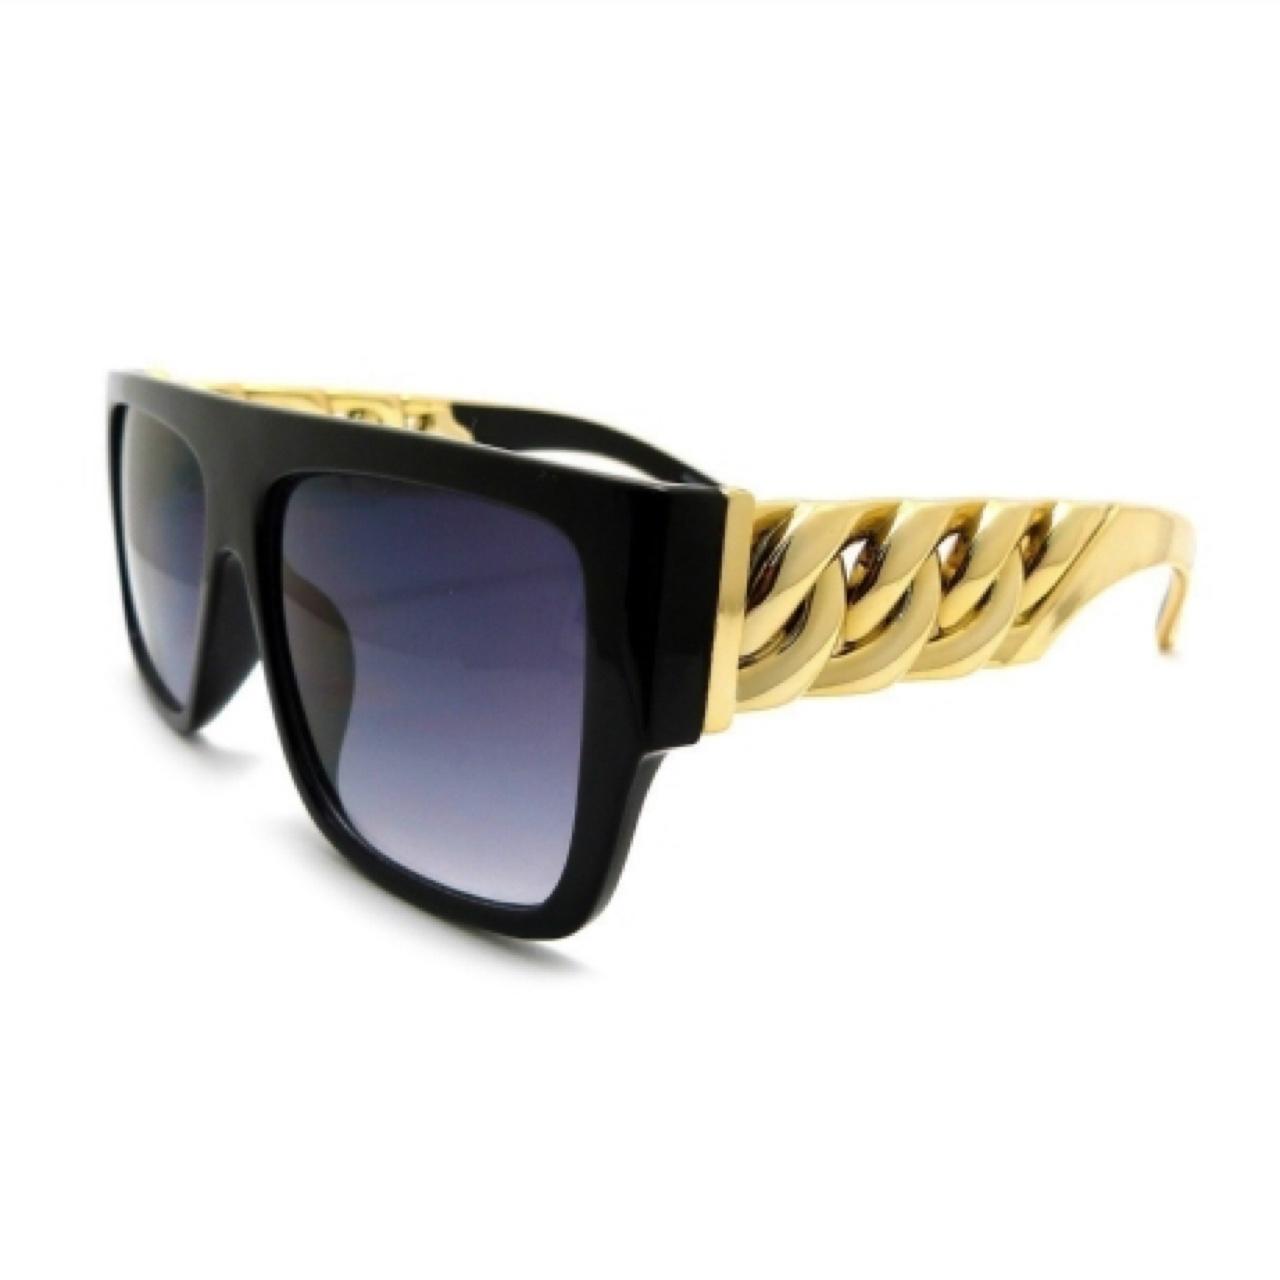 Brand new chain style sunglasses #sunglasses #chains - Depop